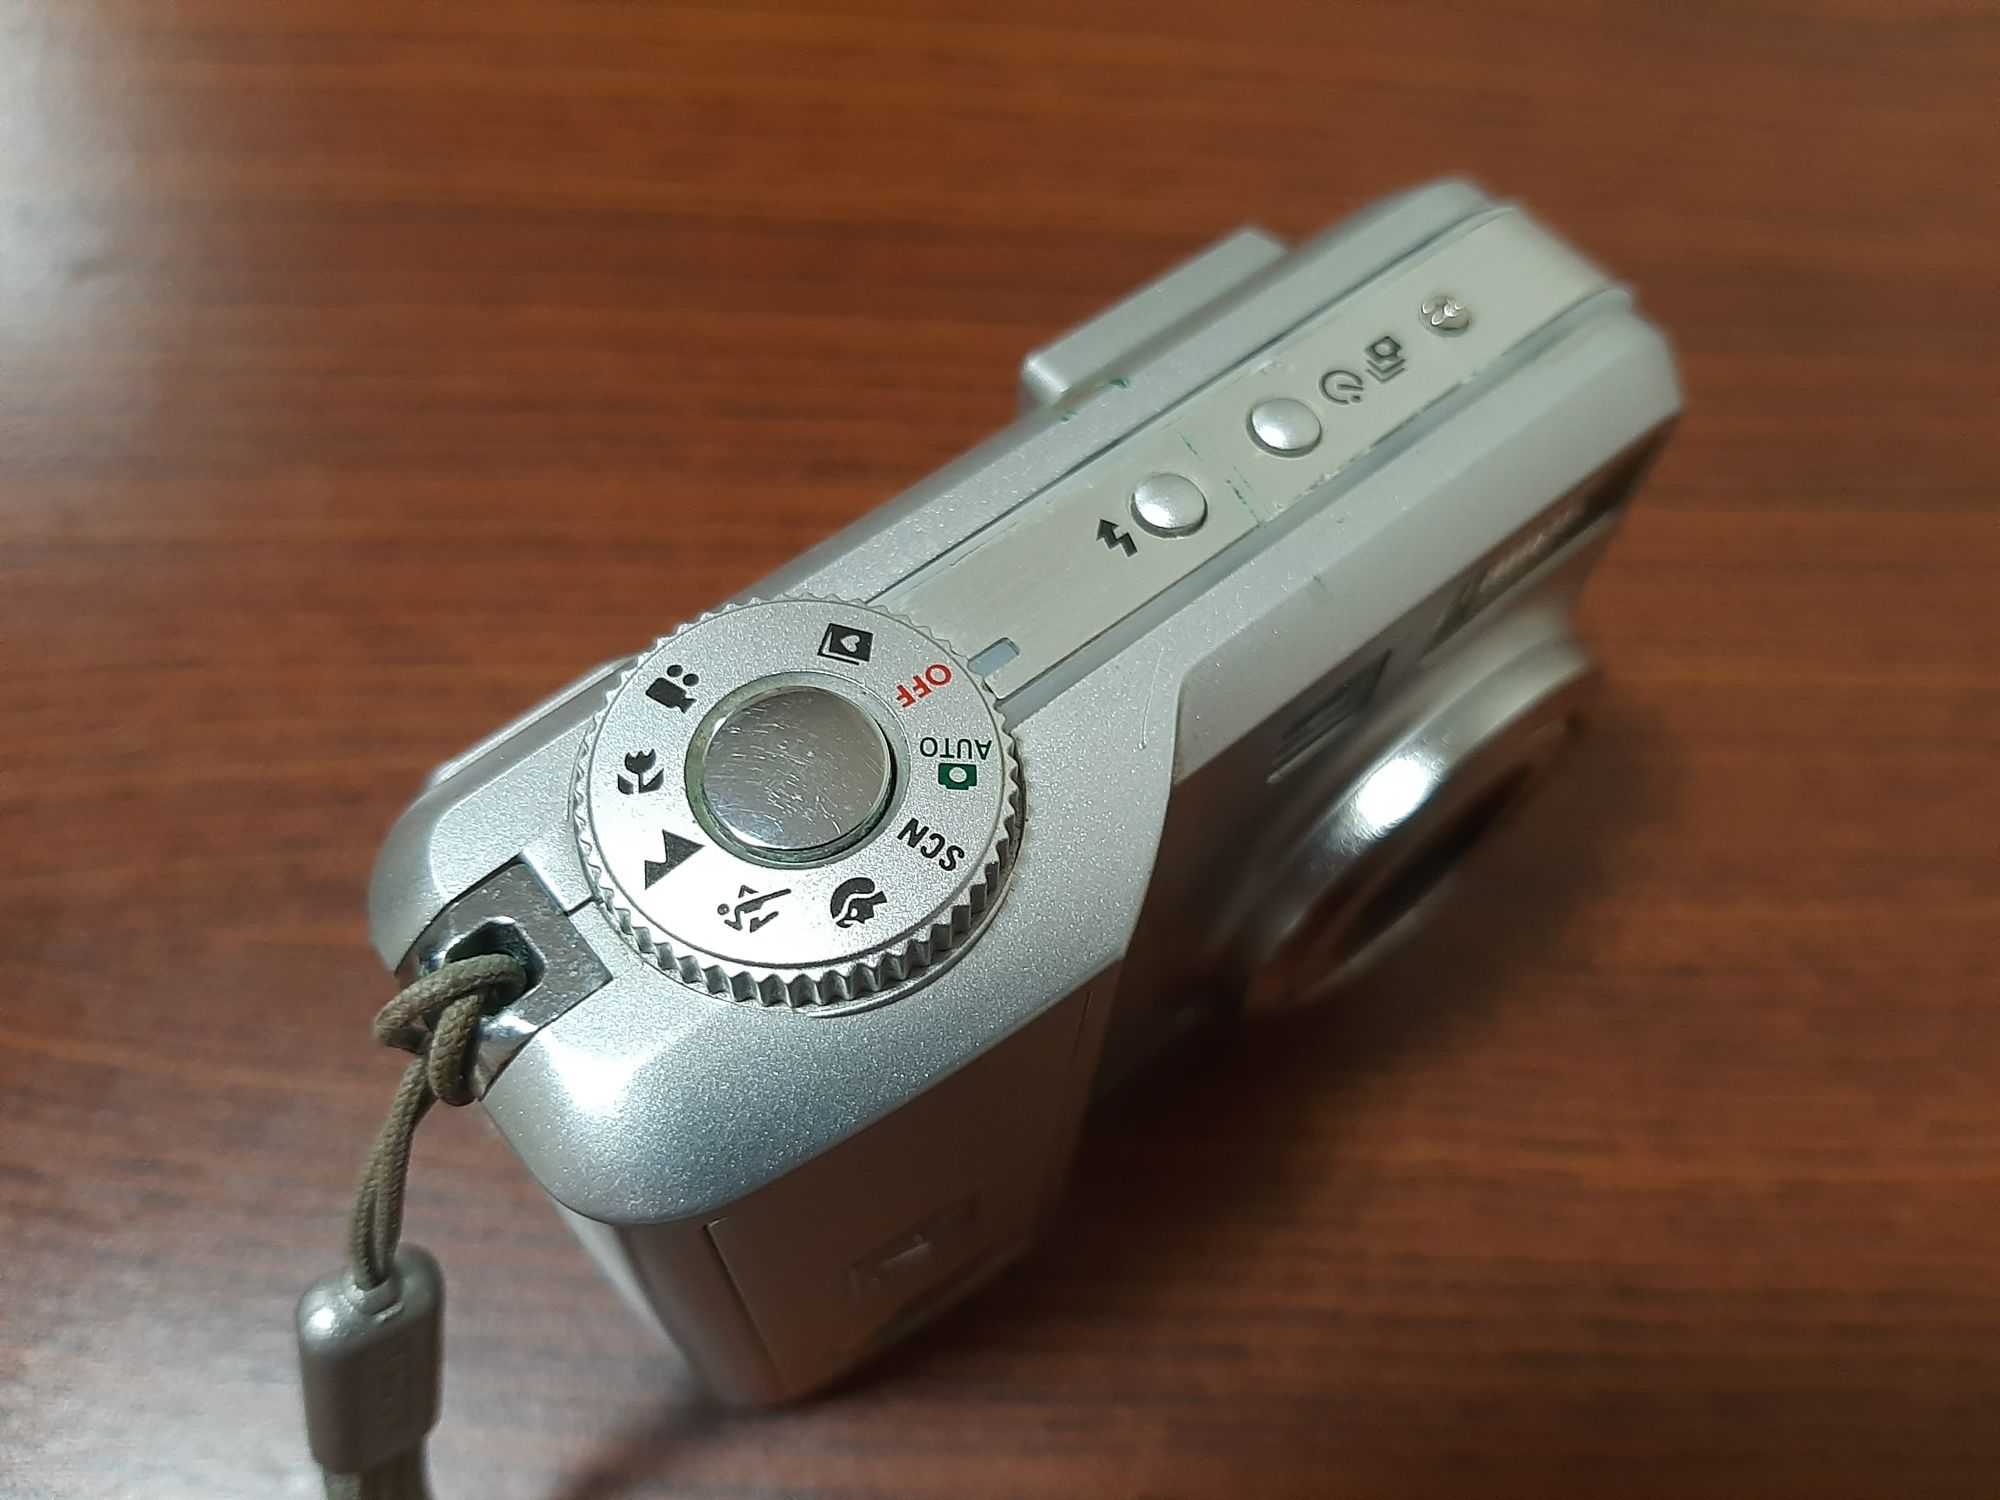 Фотоаппарат"Kodak EasyShare C360"